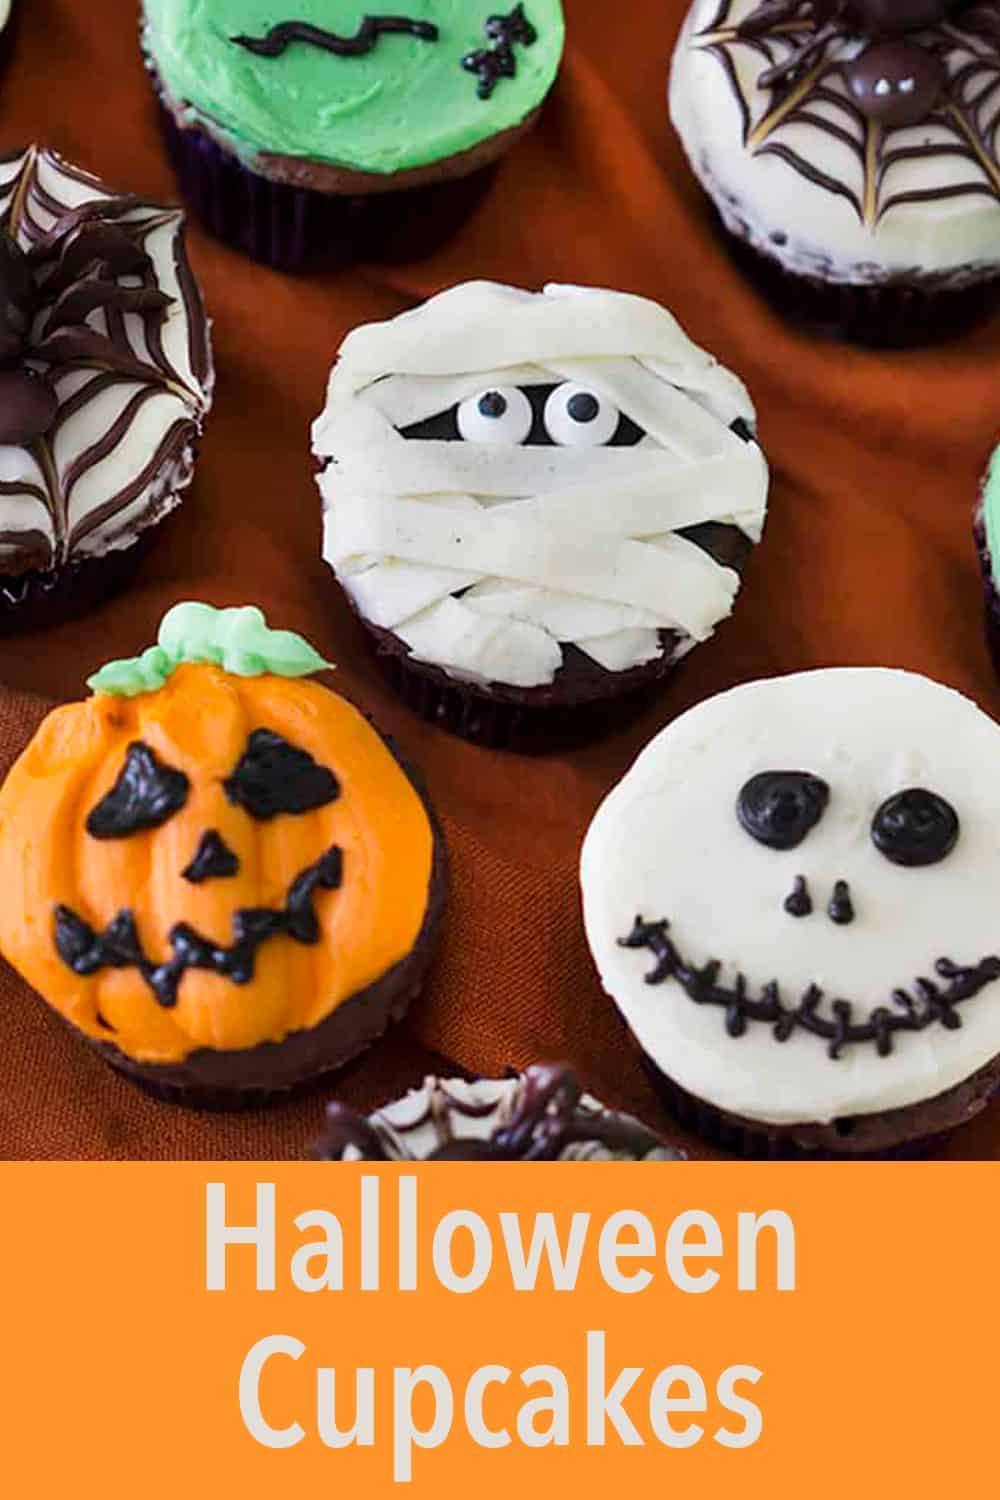 Halloween Cupcakes - Preppy Kitchen